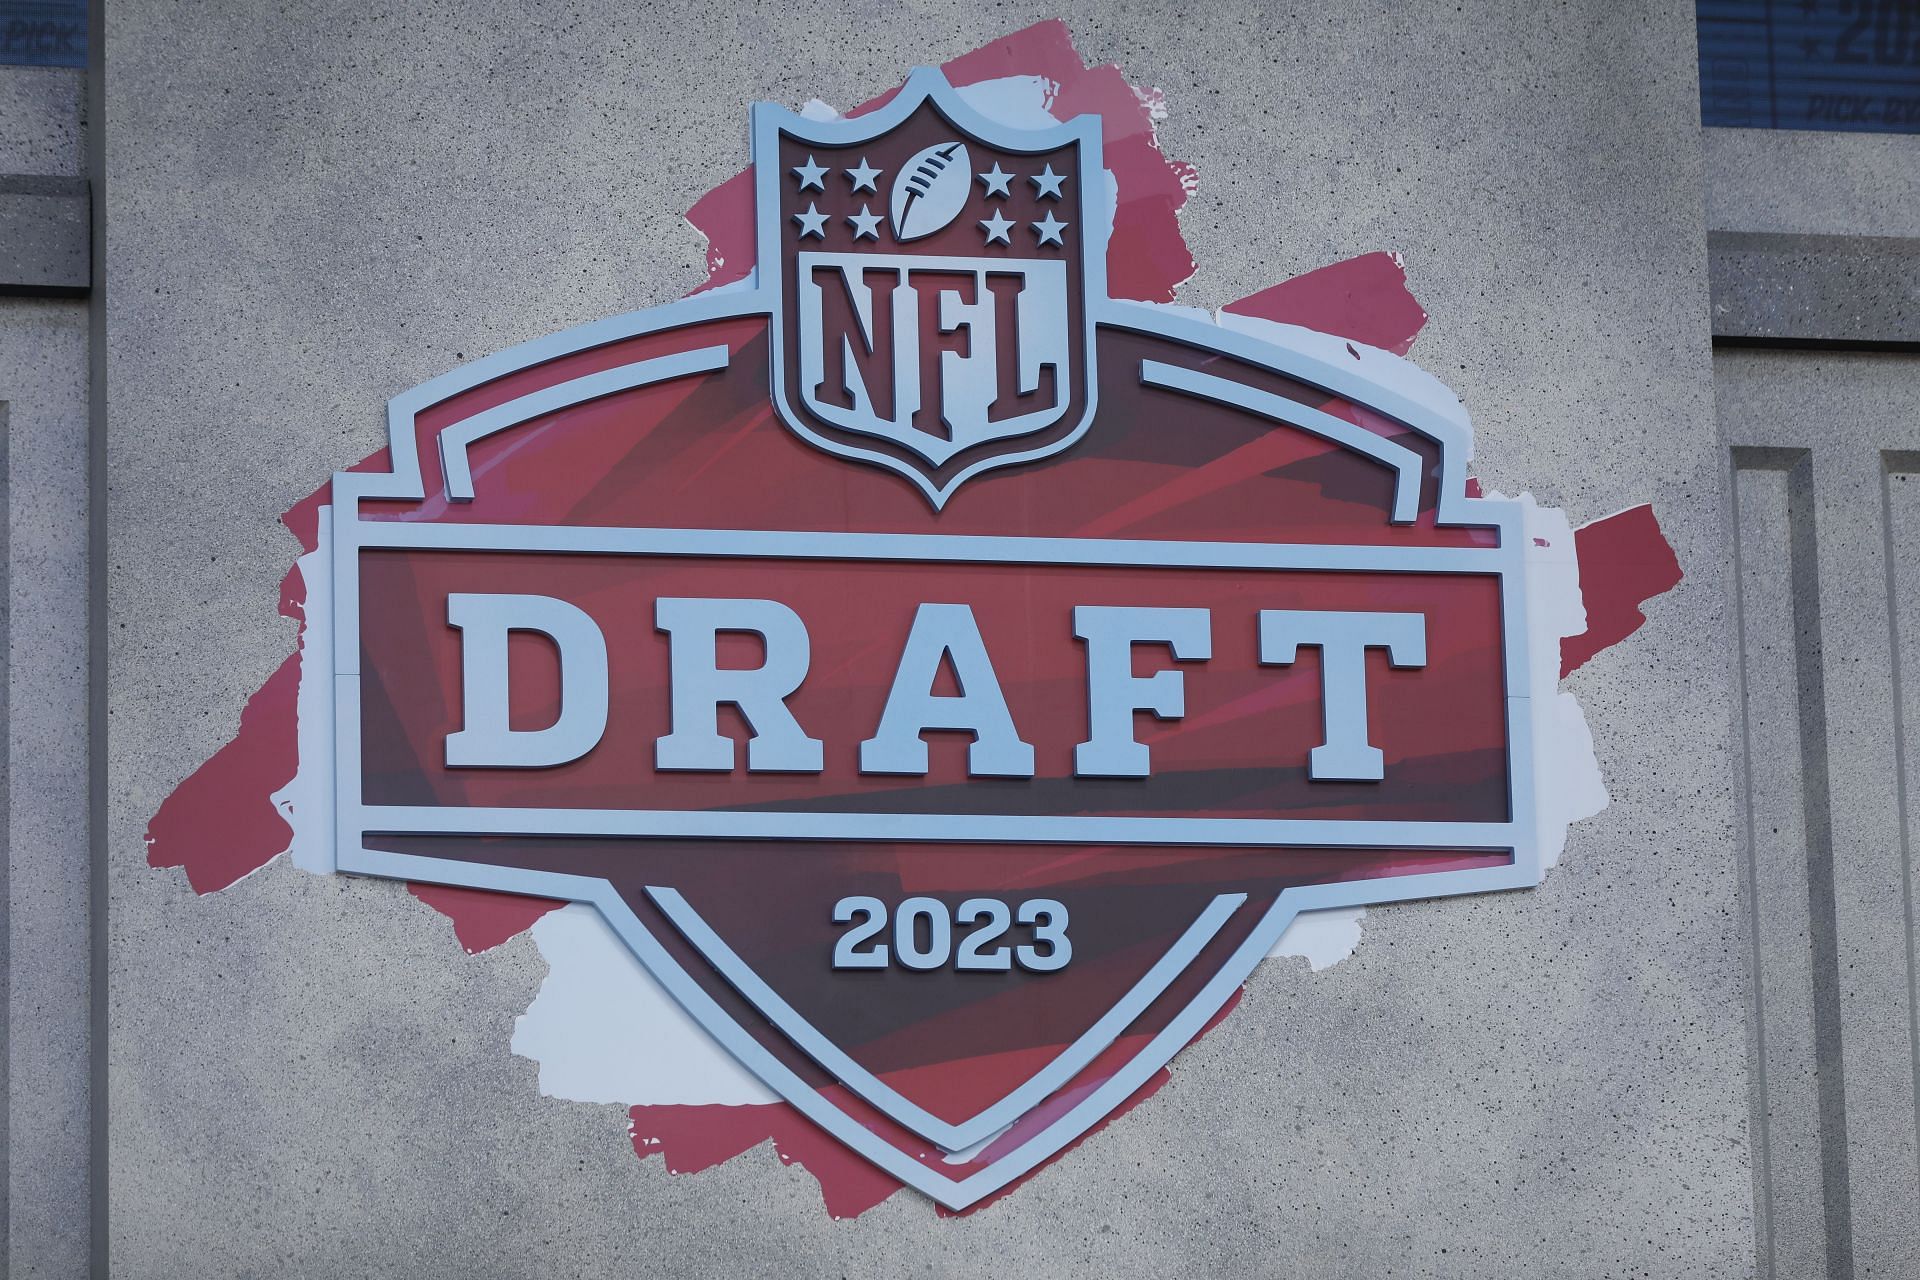 The 2023 NFL Draft logo